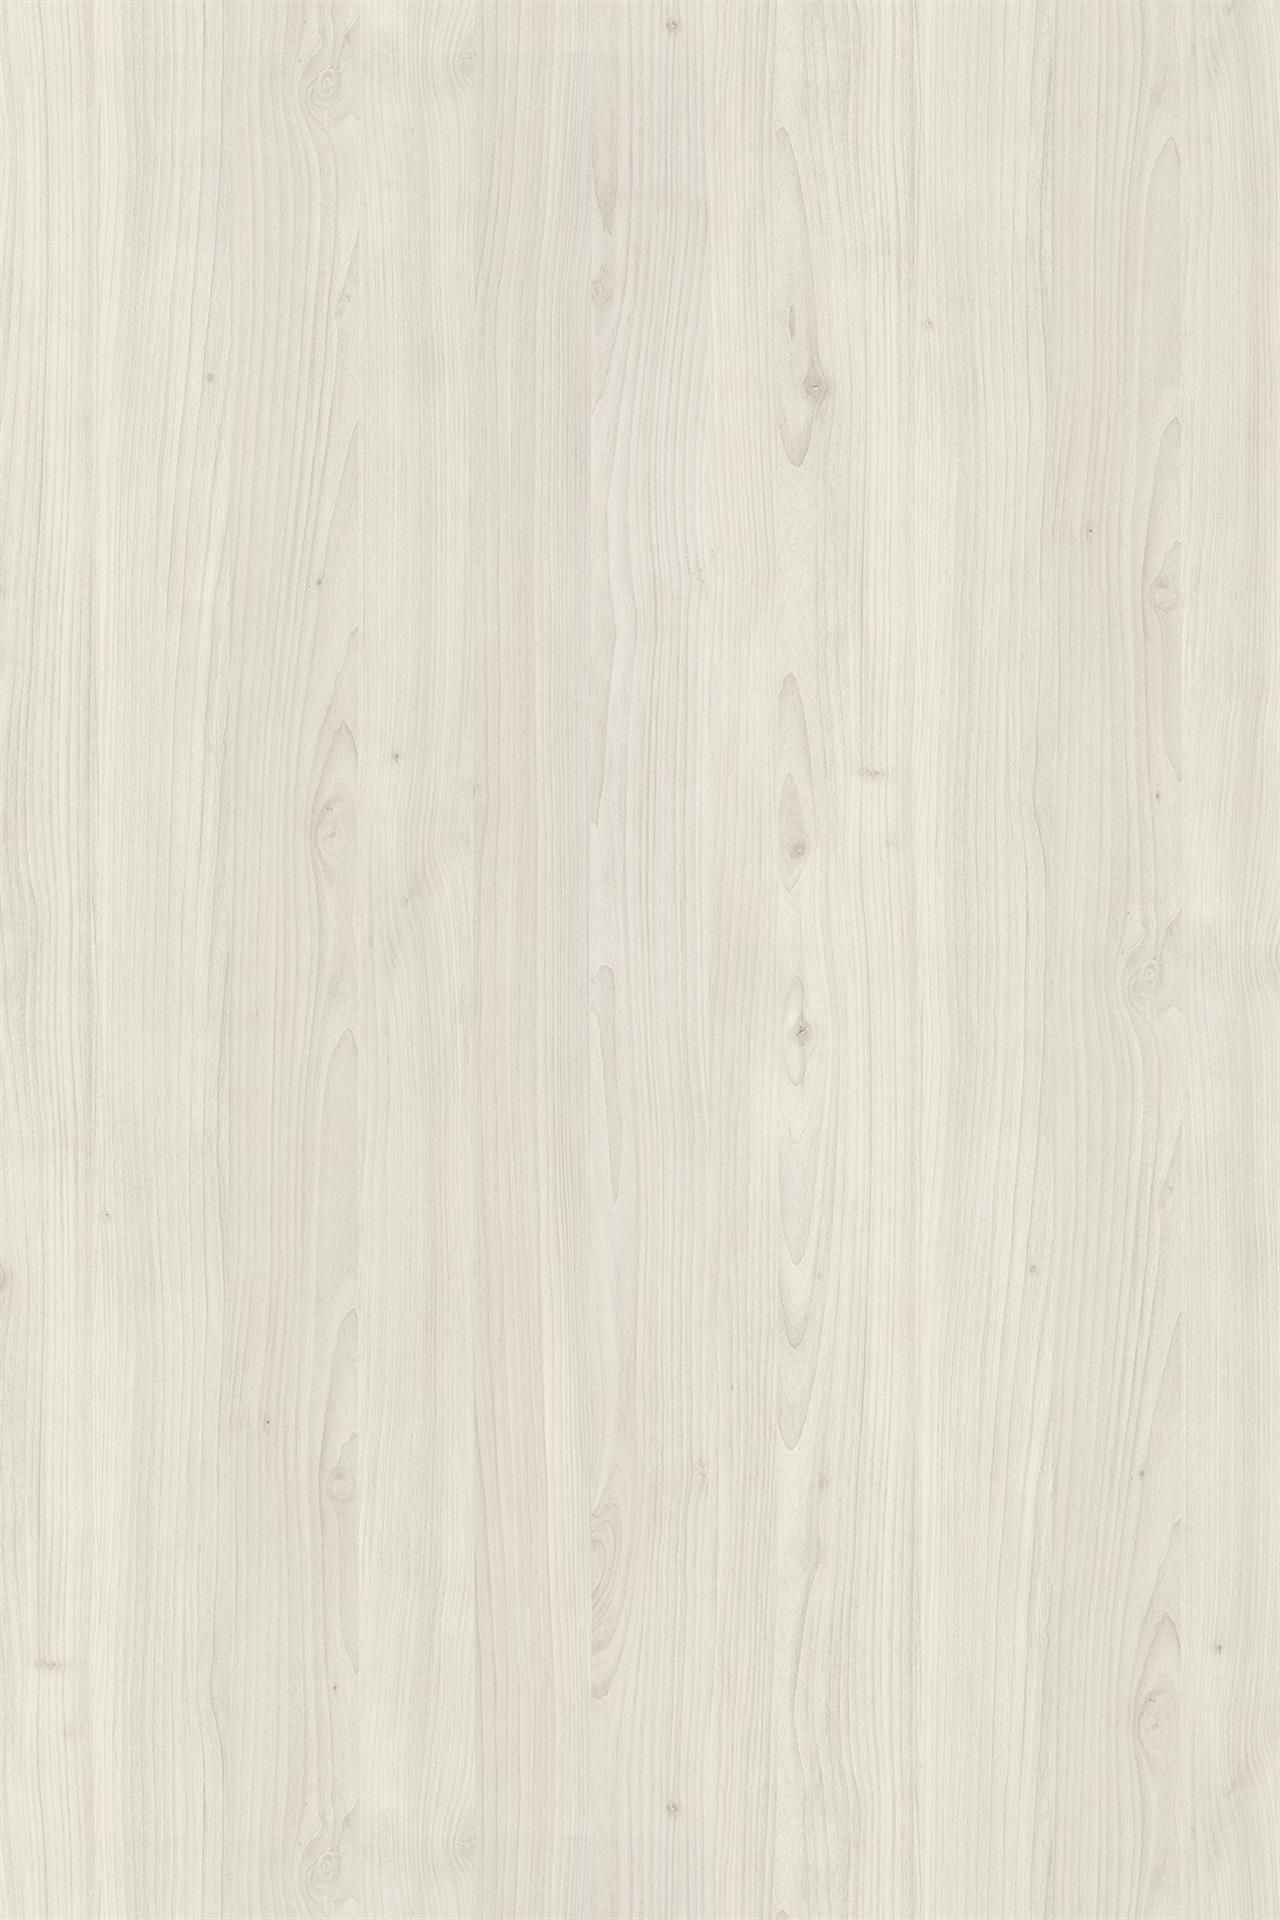 Poza Pal White Nordic Wood .Pure Wood - k088pw [2]